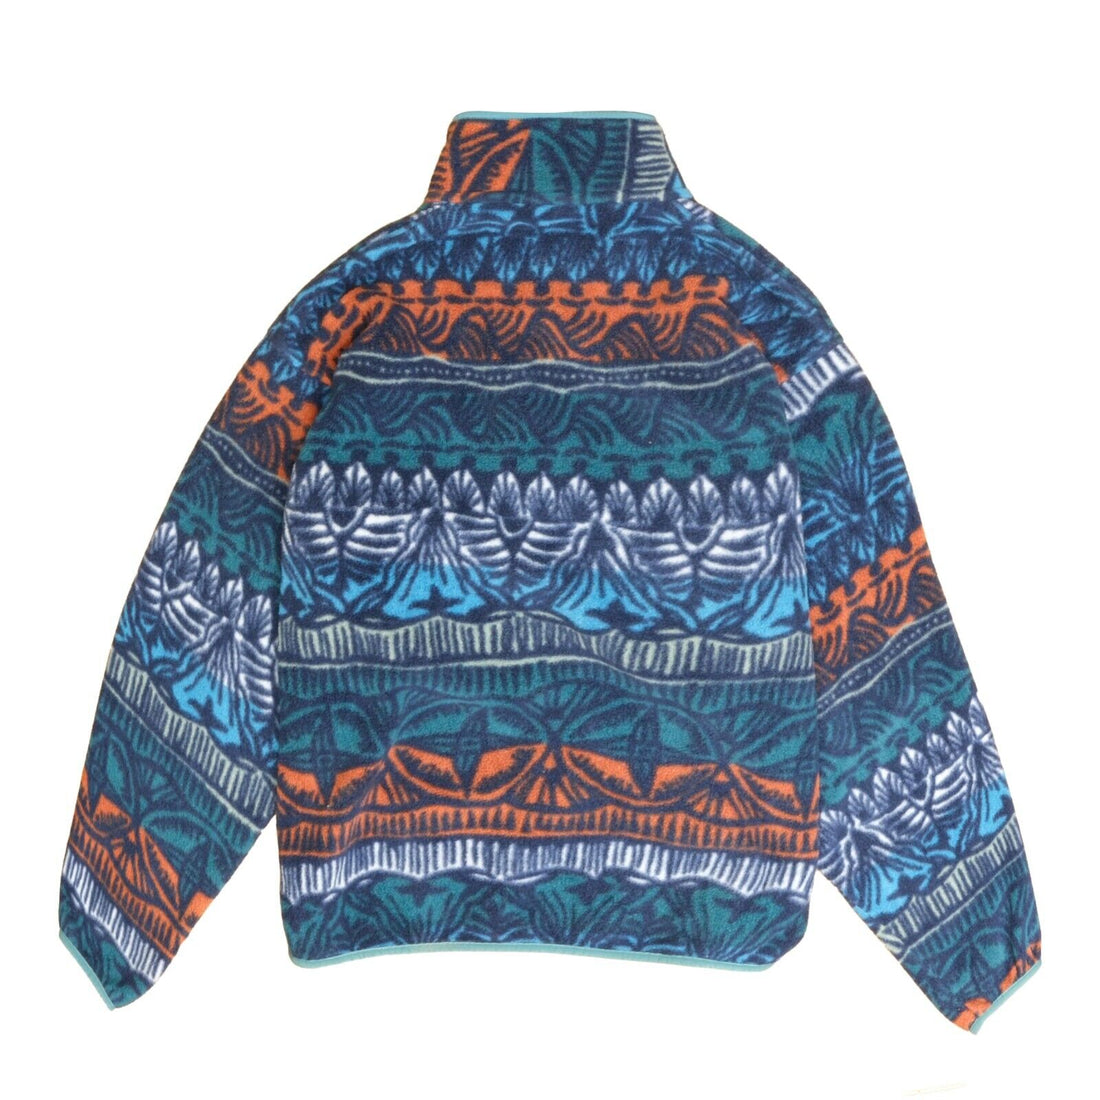 Patagonia Synchilla Snap-T Fleece Jacket Size Medium Tradewinds